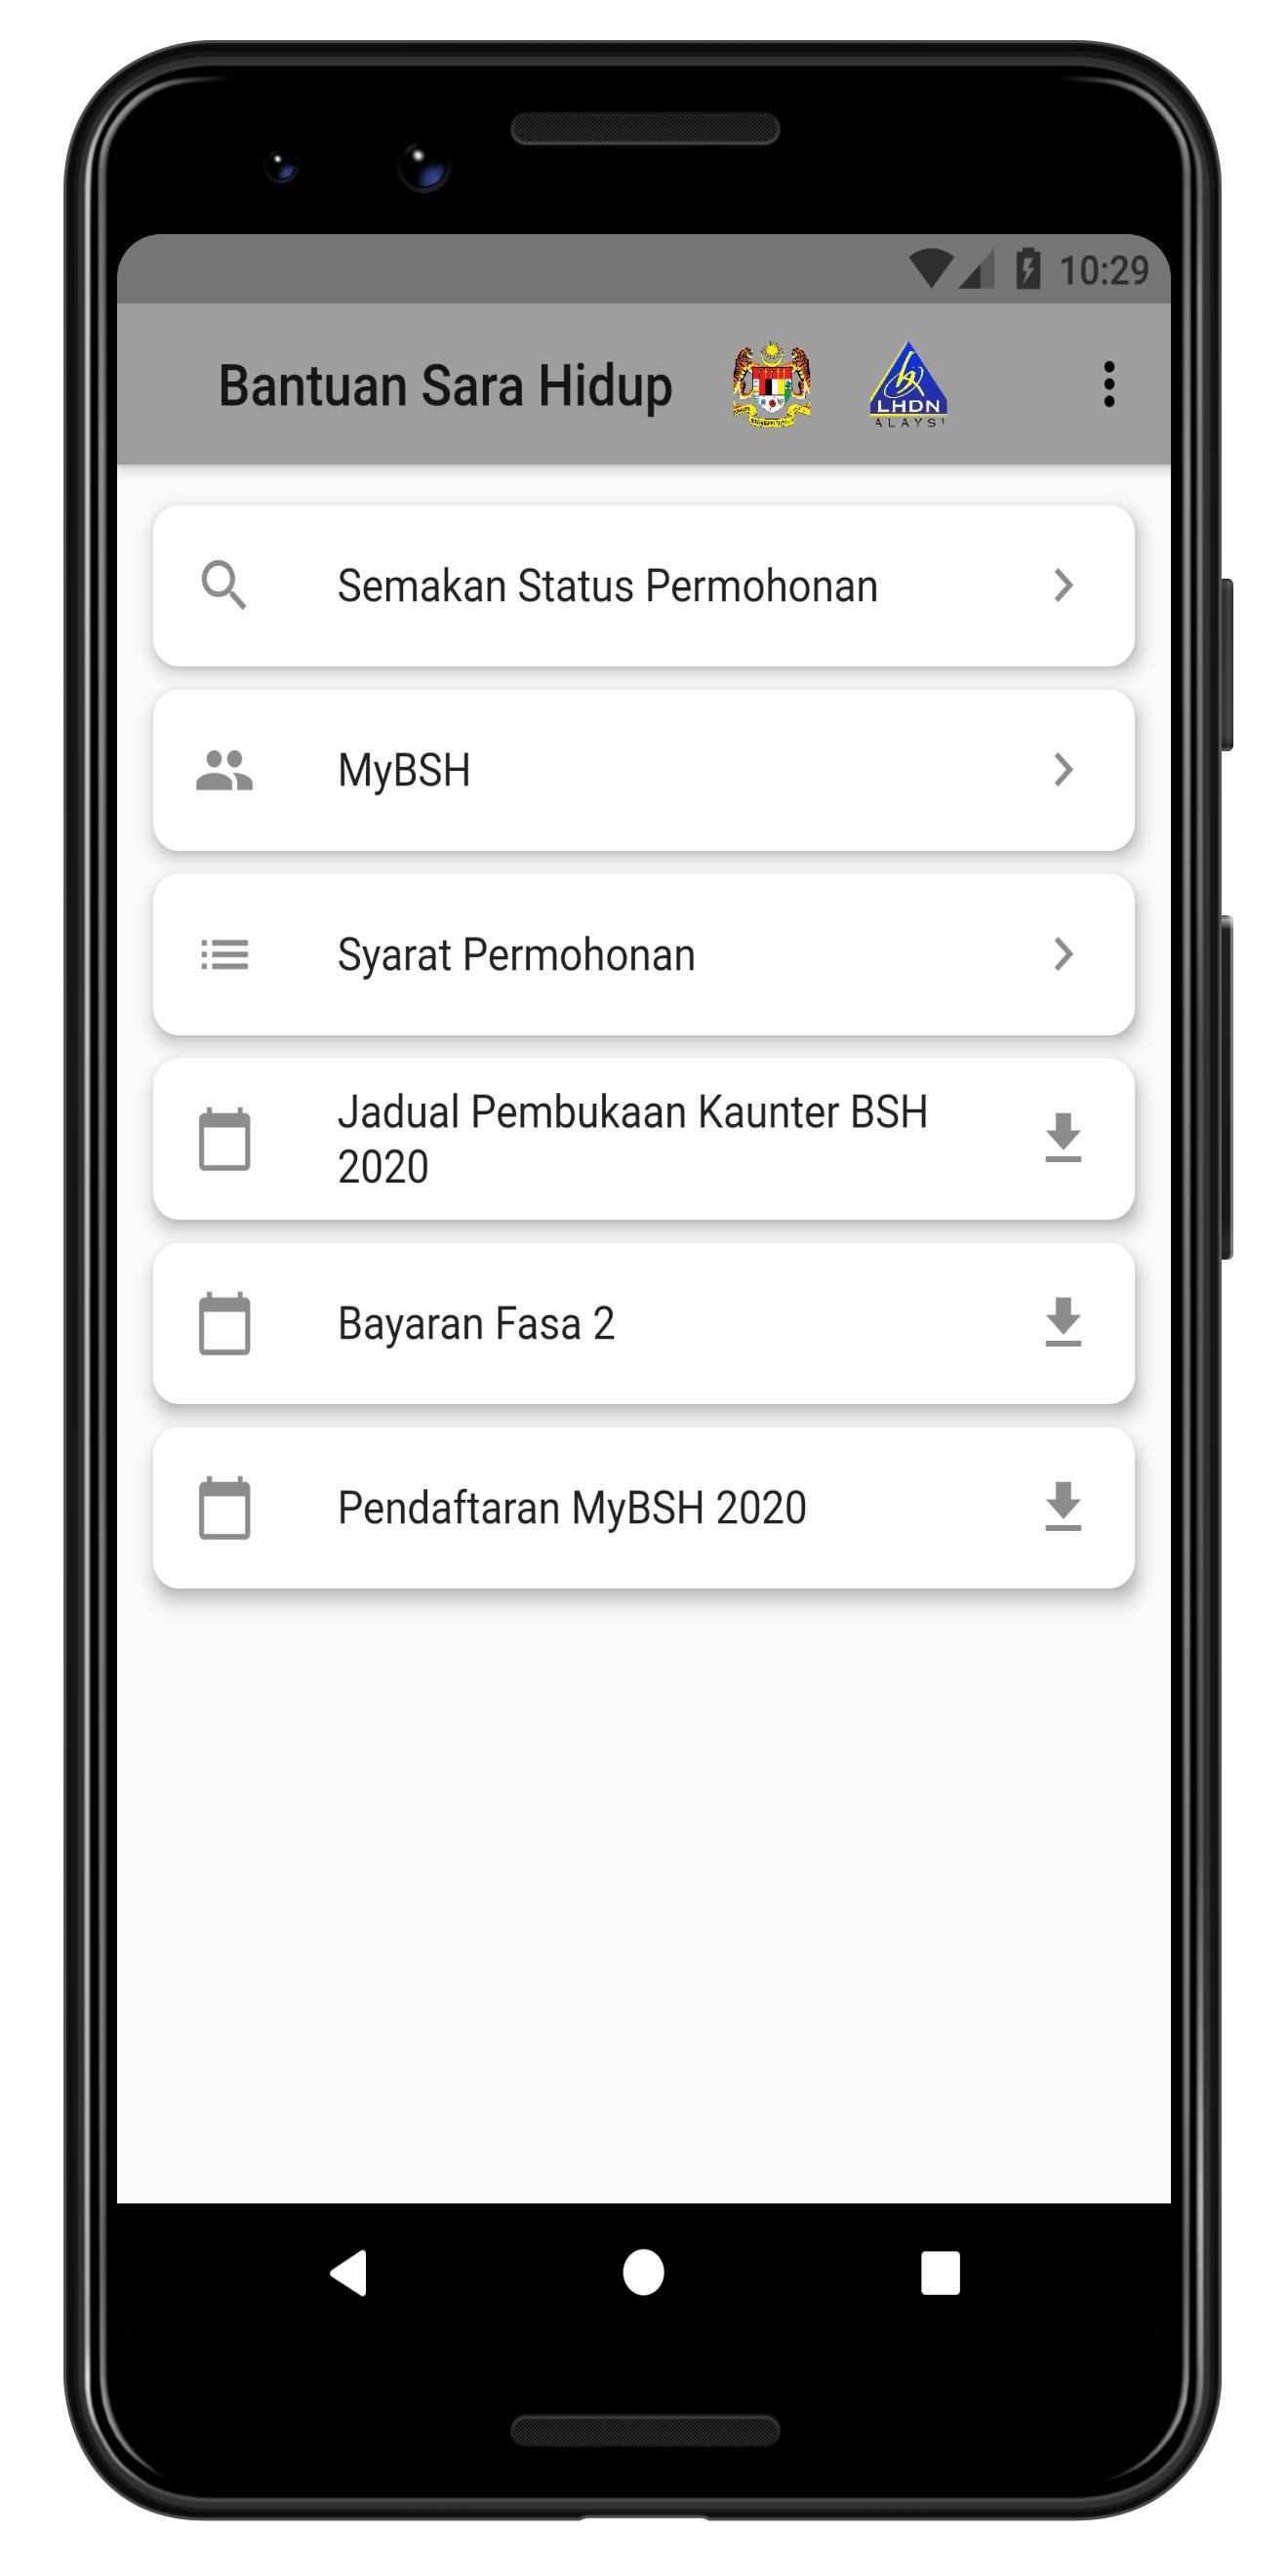 Bantuan Sara Hidup Bsh 2020 For Android Apk Download